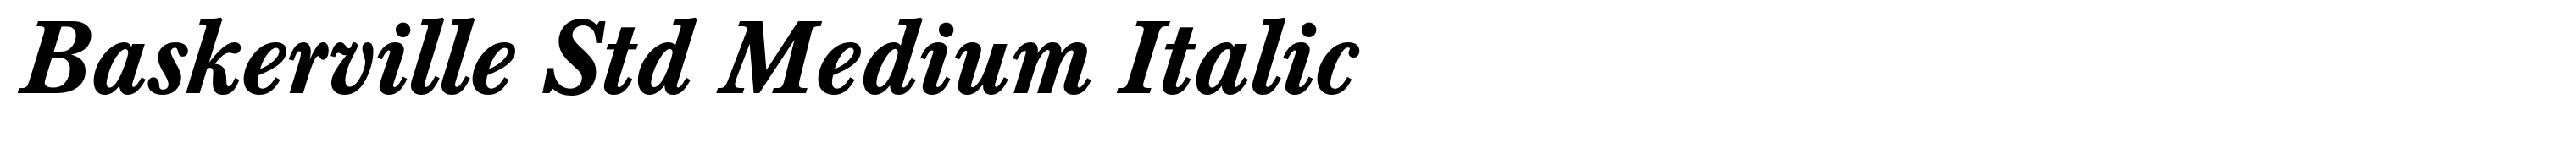 Baskerville Std Medium Italic